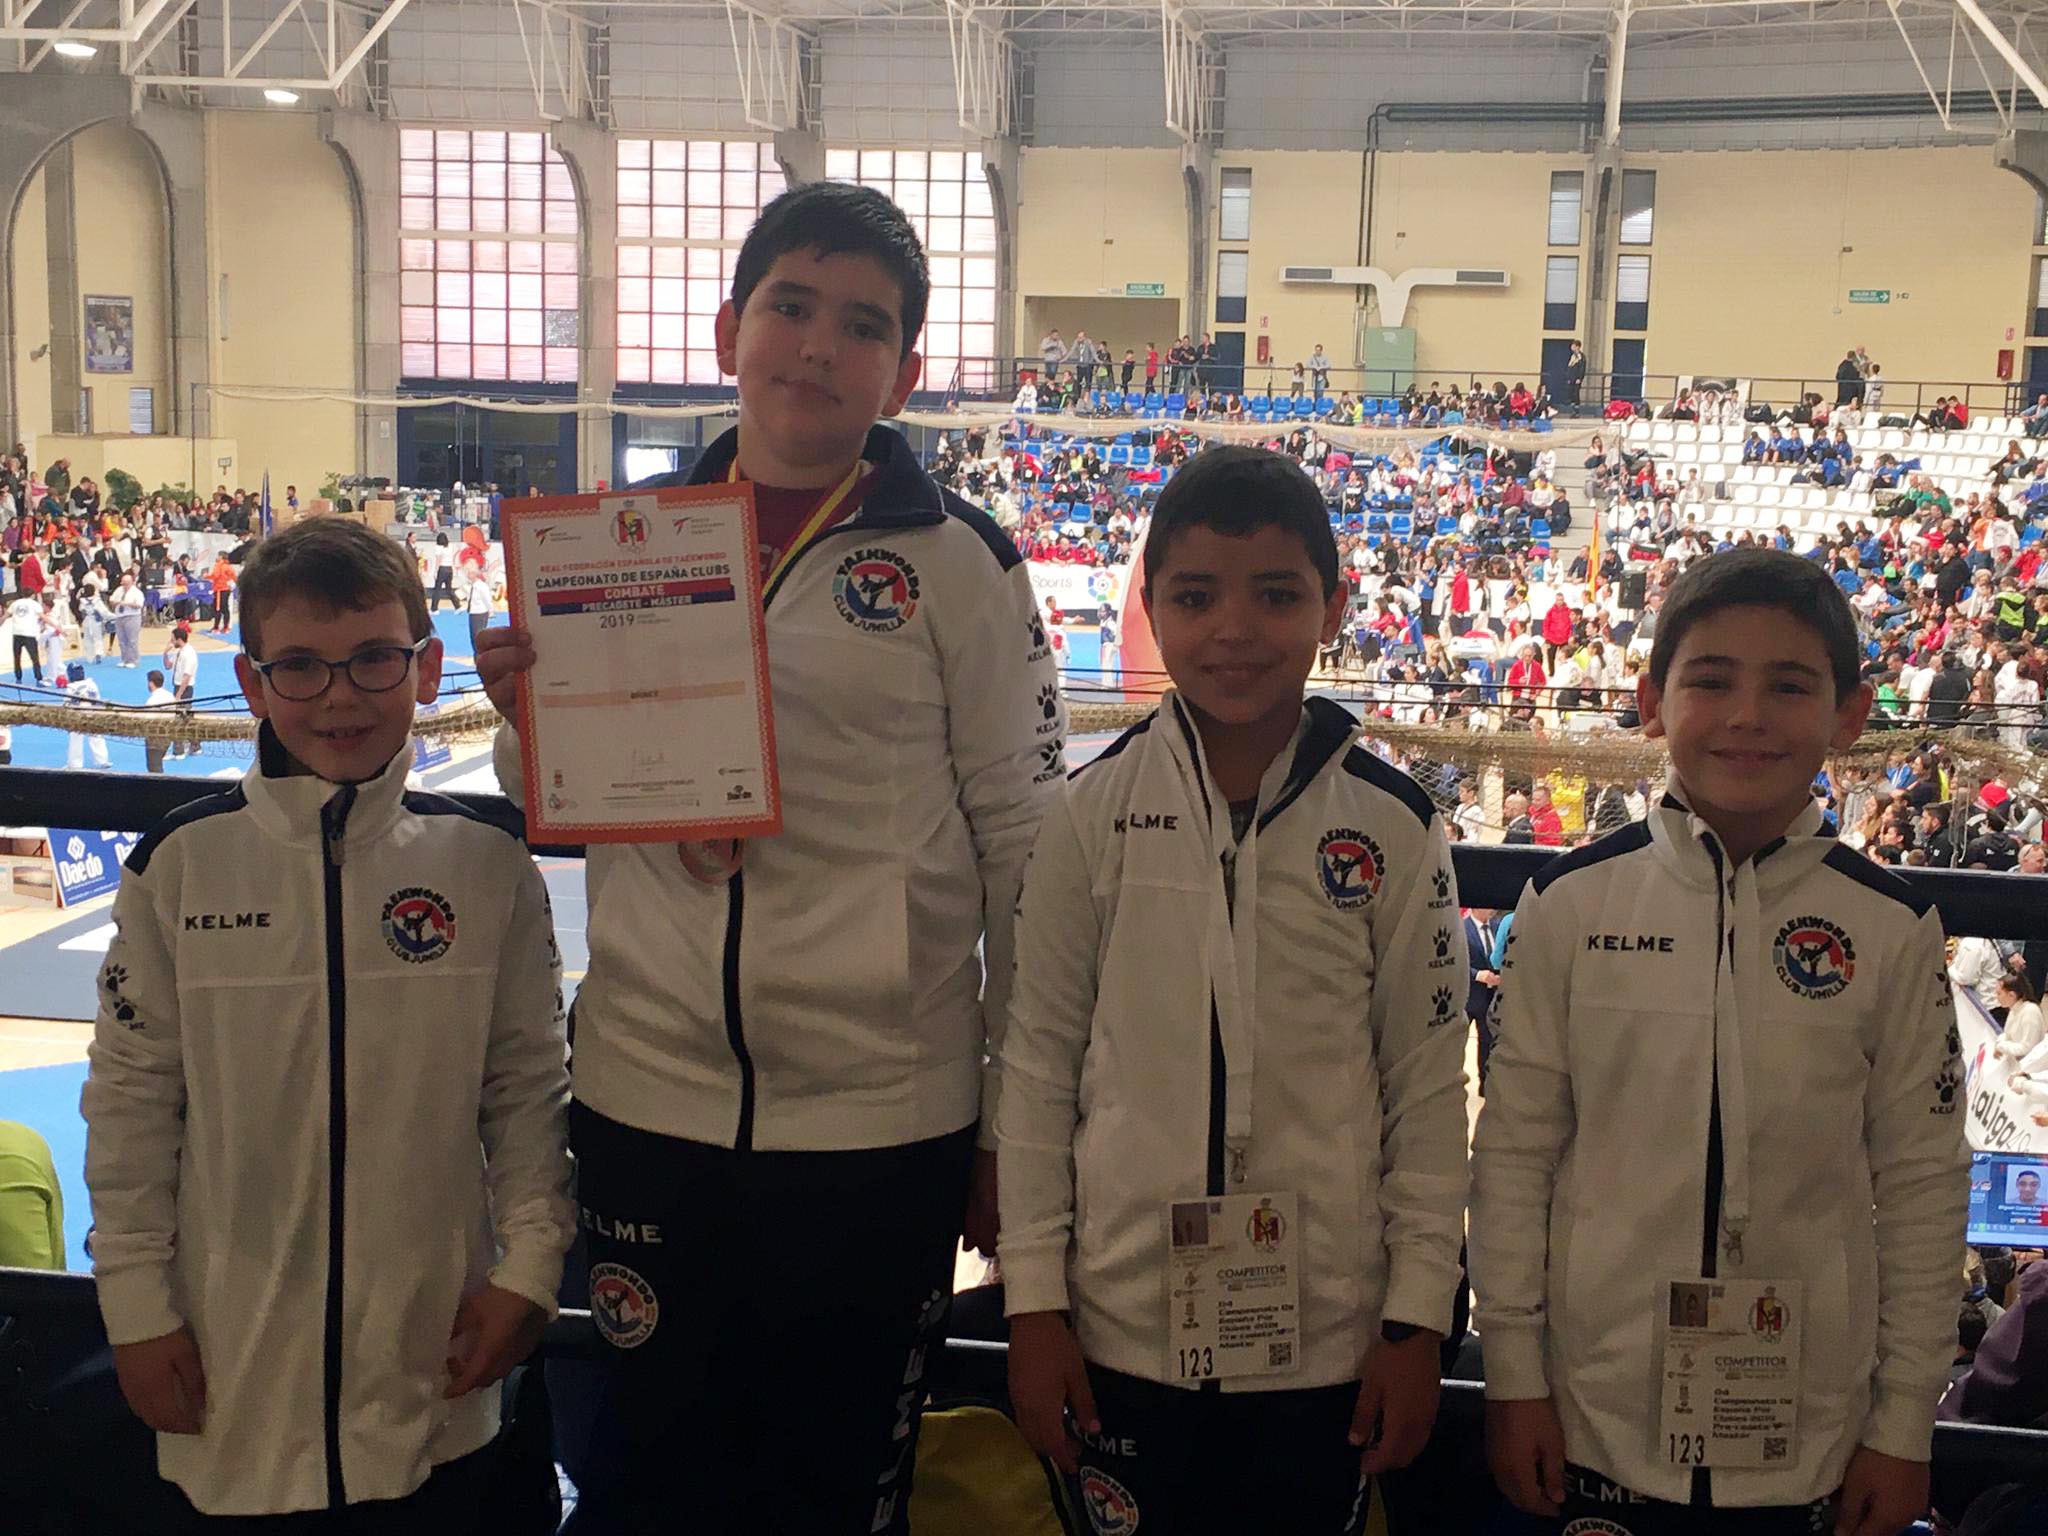 Bronce de Roque Gil en el Campeonato de España de Taekwondo